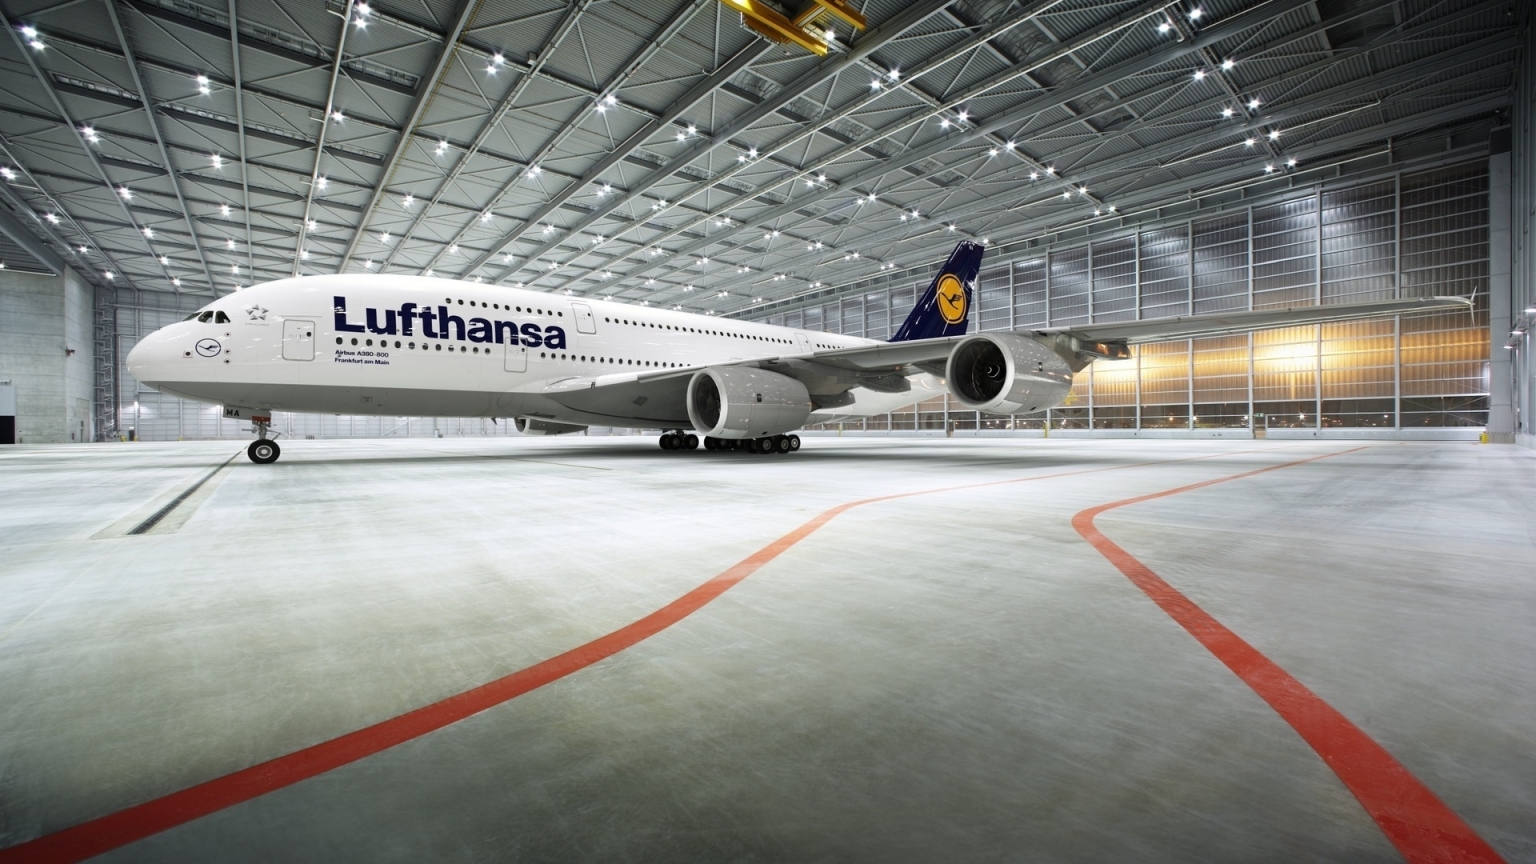 Lufthansa for 1536 x 864 HDTV resolution